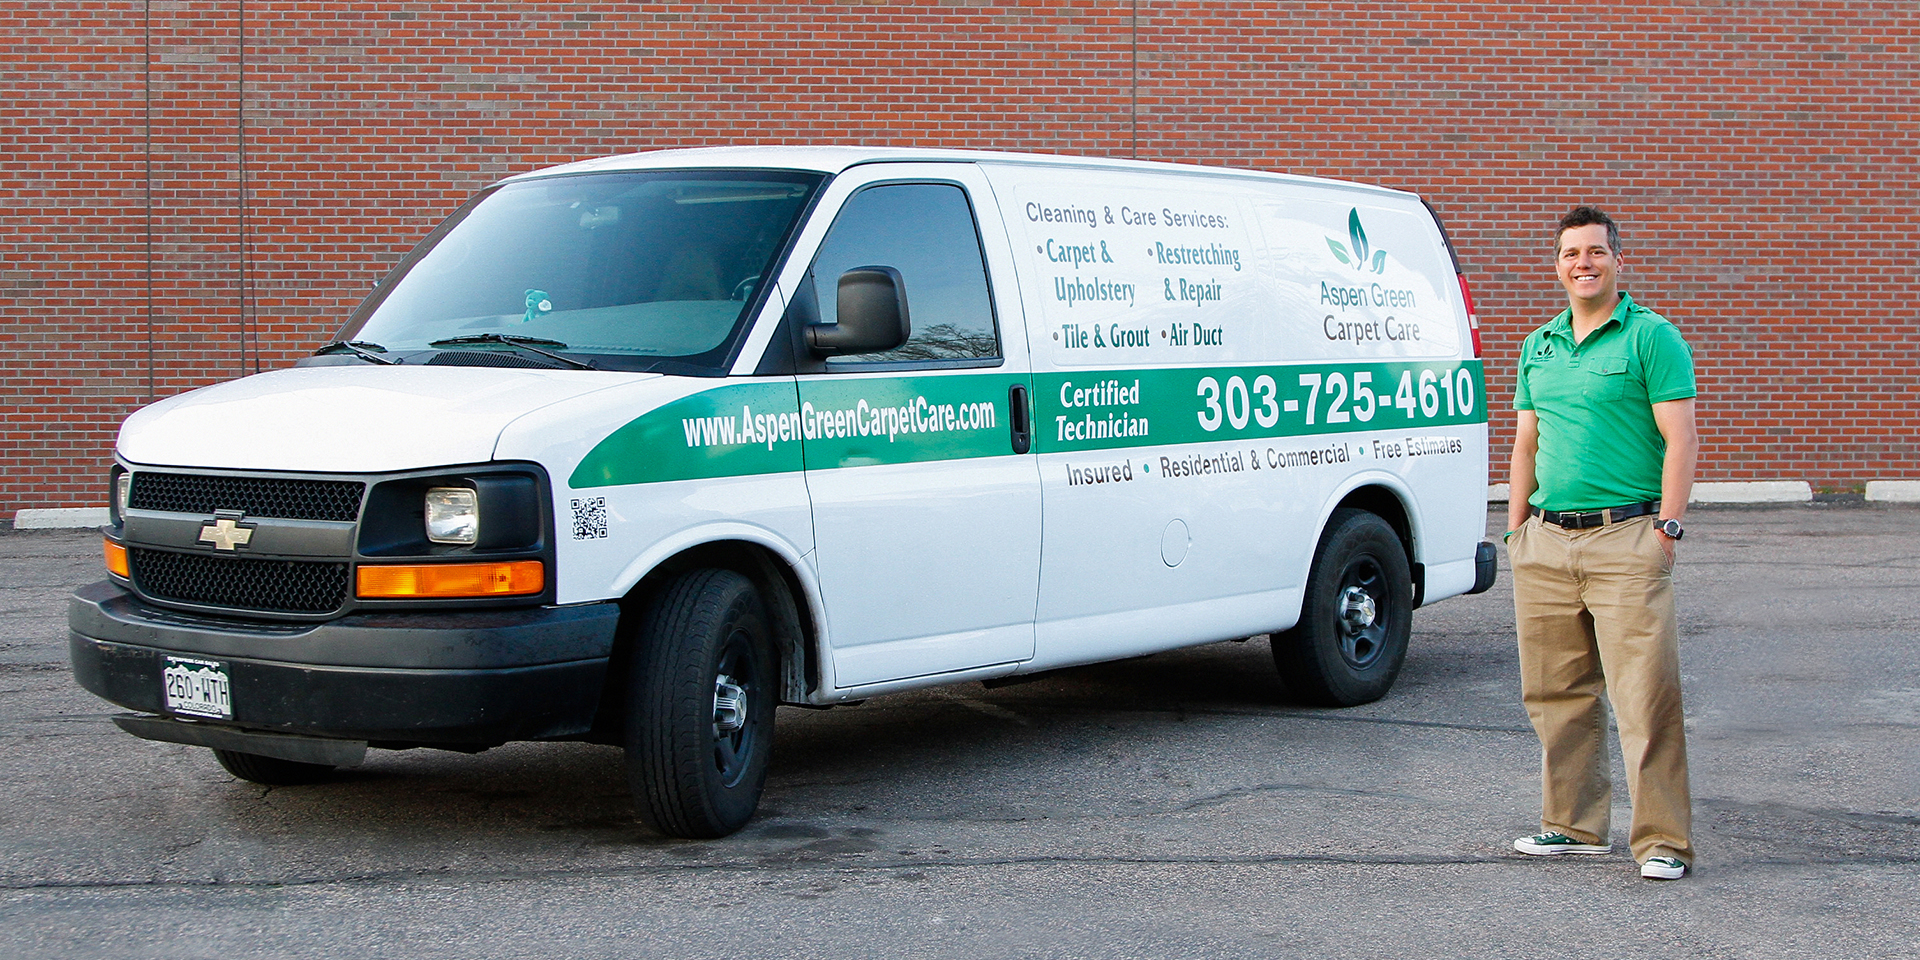 3. official company service van mobile of Aspen Green Carpet Care in Colorado